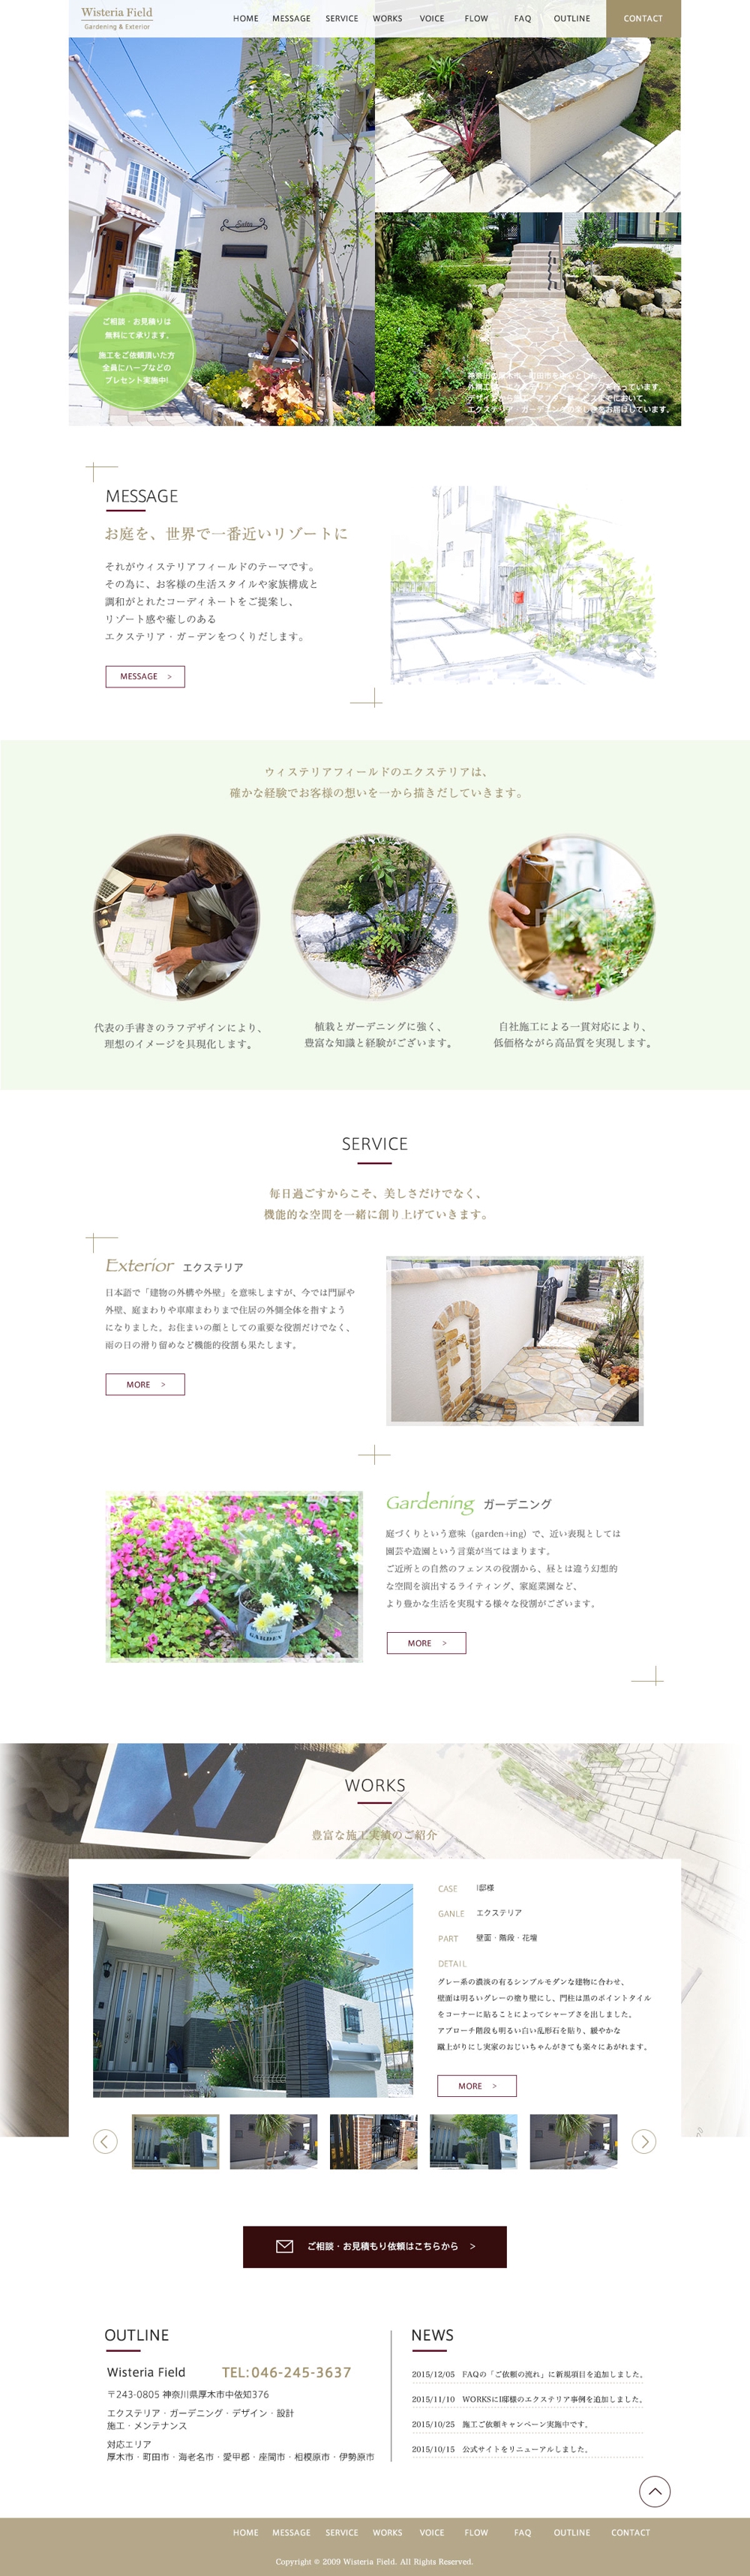 wisteria-field_1.jpg